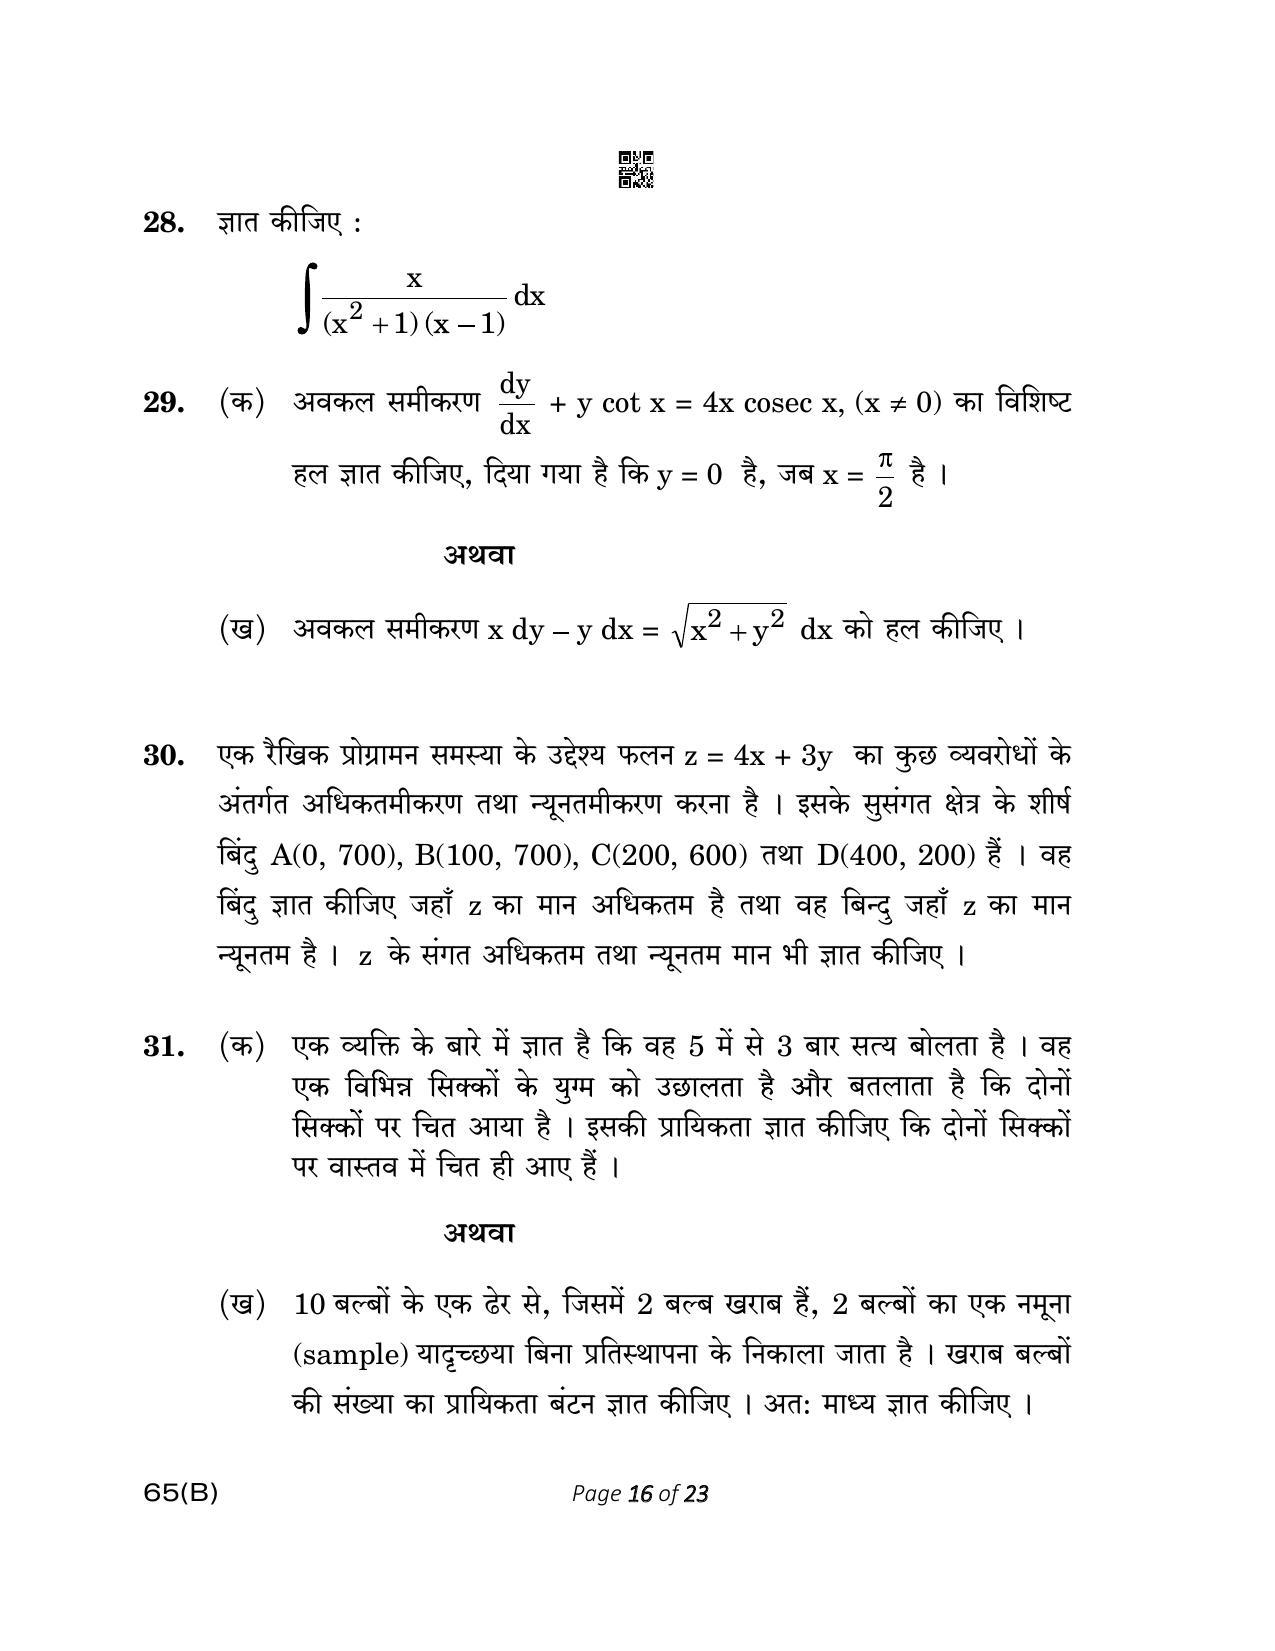 CBSE Class 12 65(B) MATHEMATICS FOR VI 2023 Question Paper - Page 16